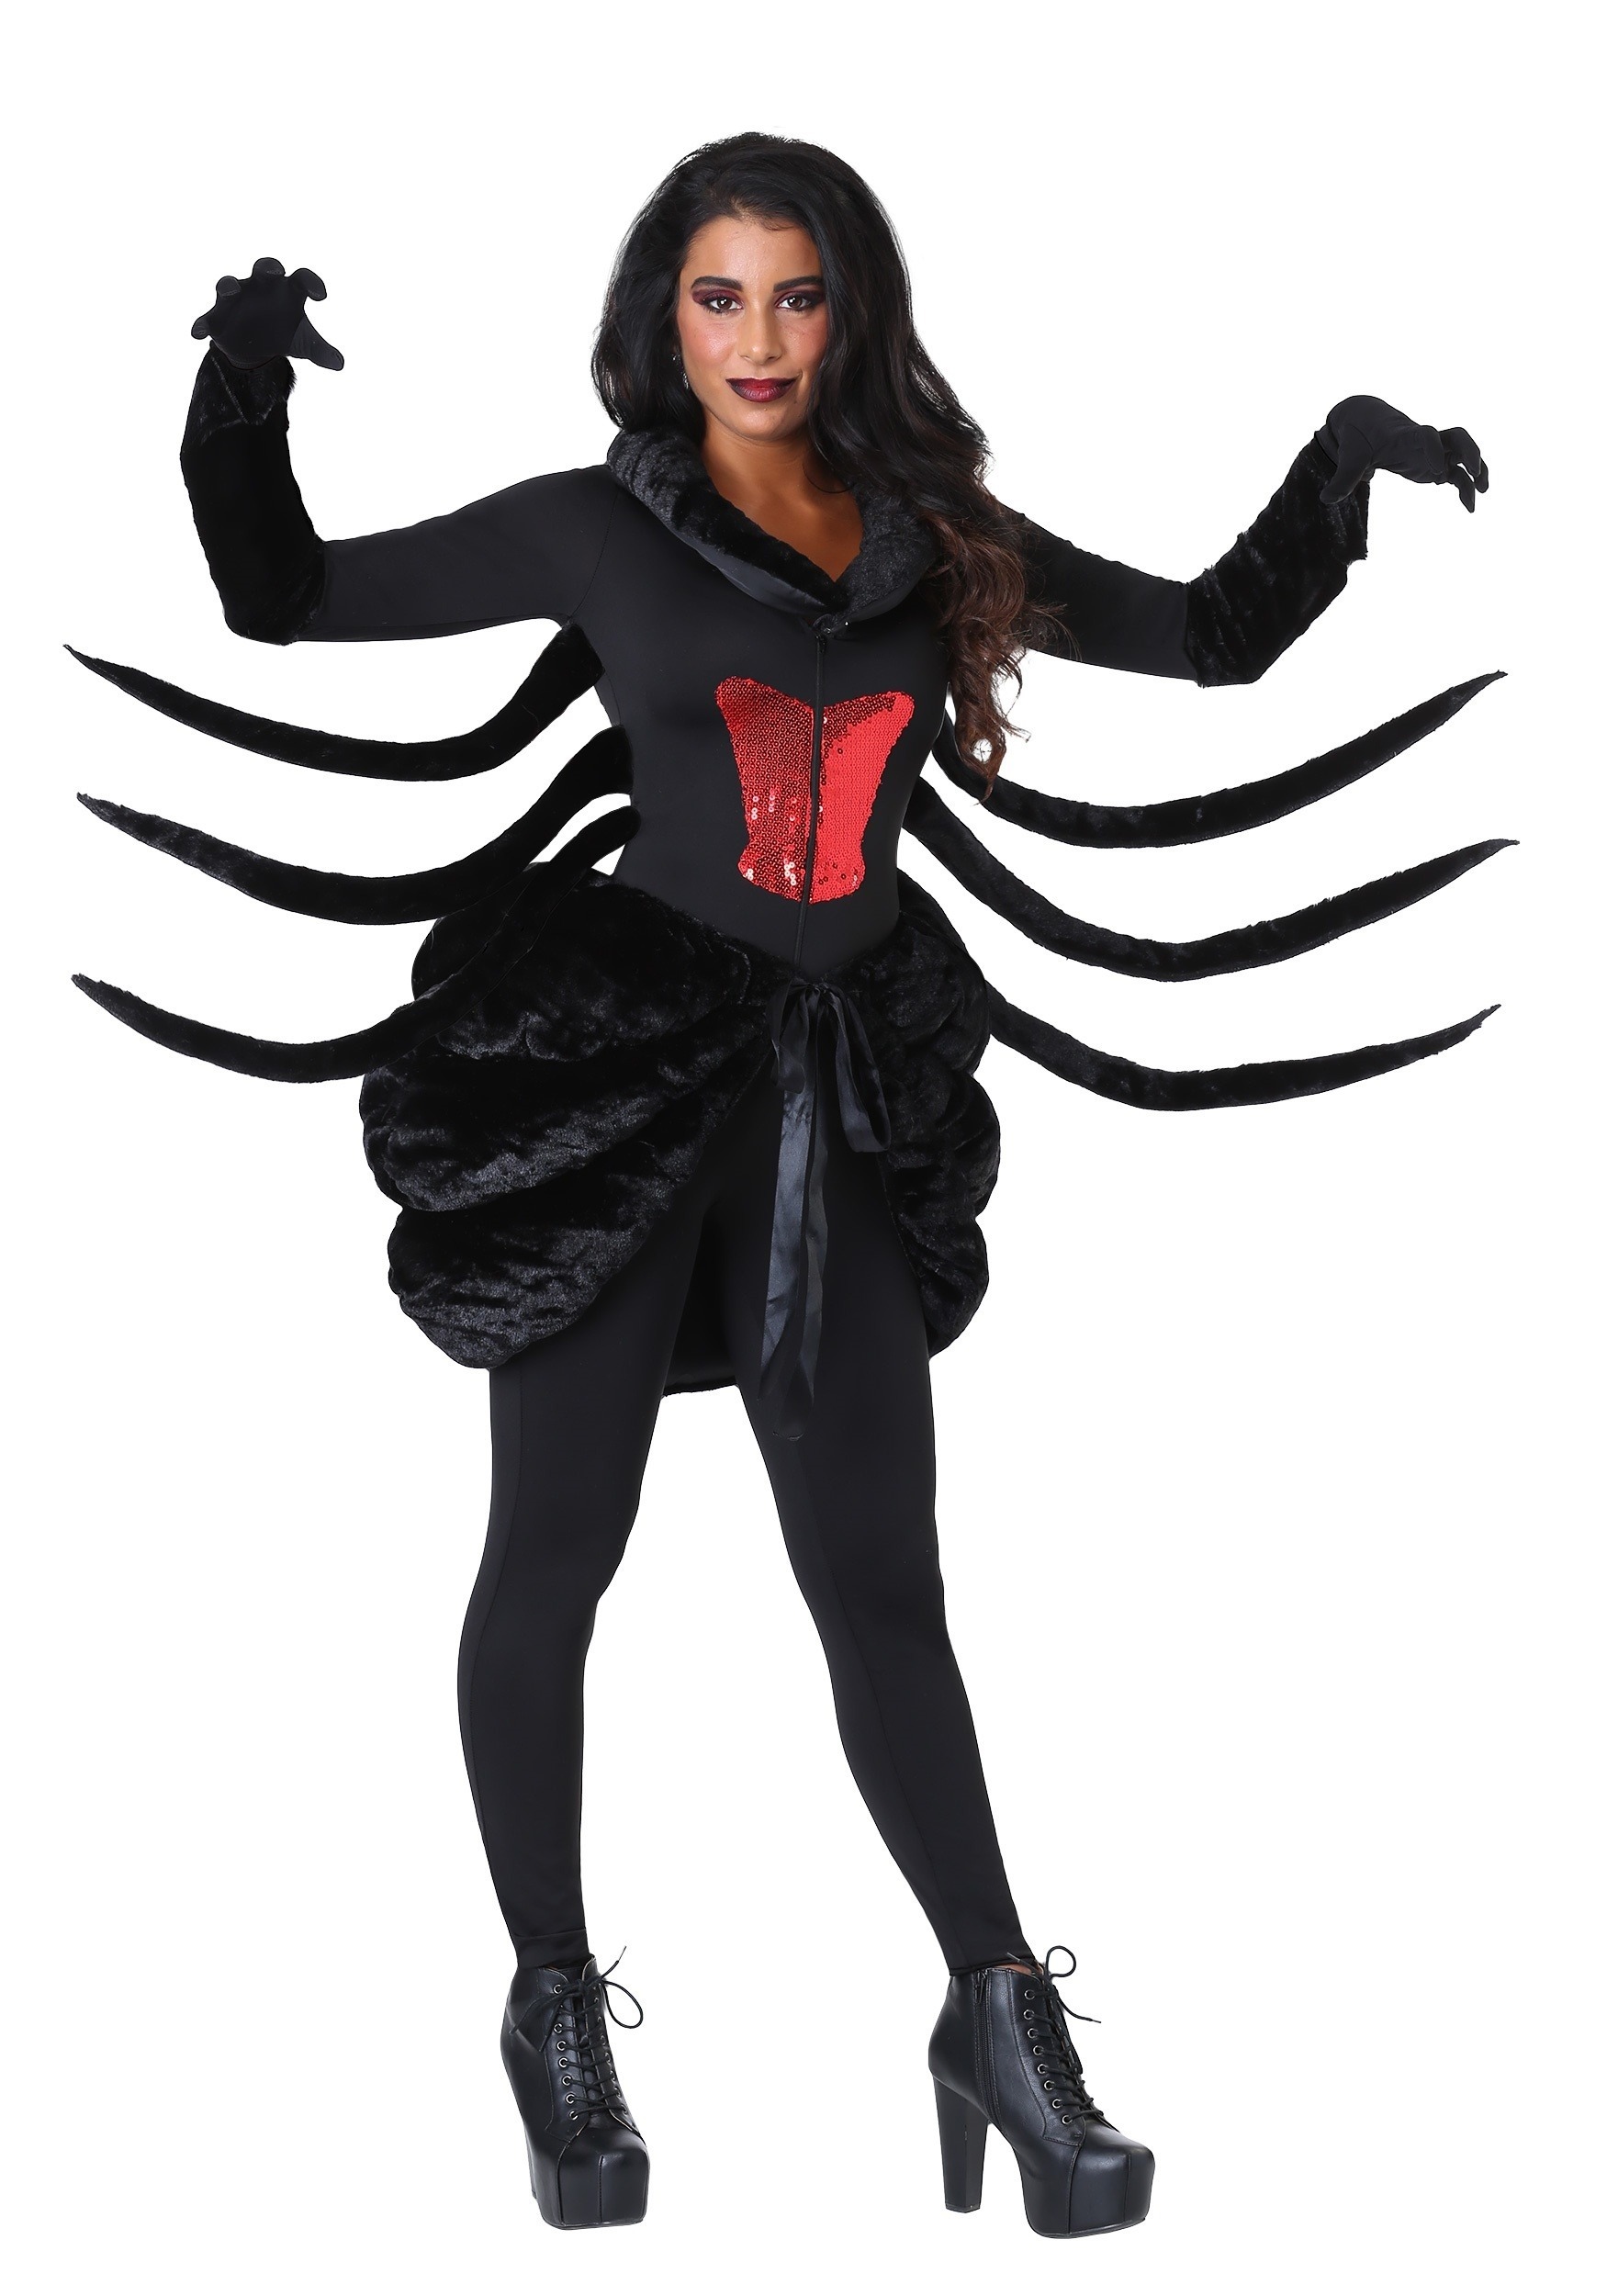 Photos - Fancy Dress FUN Costumes Women's Plus Size Black Widow Spider Costume Black/Red FU